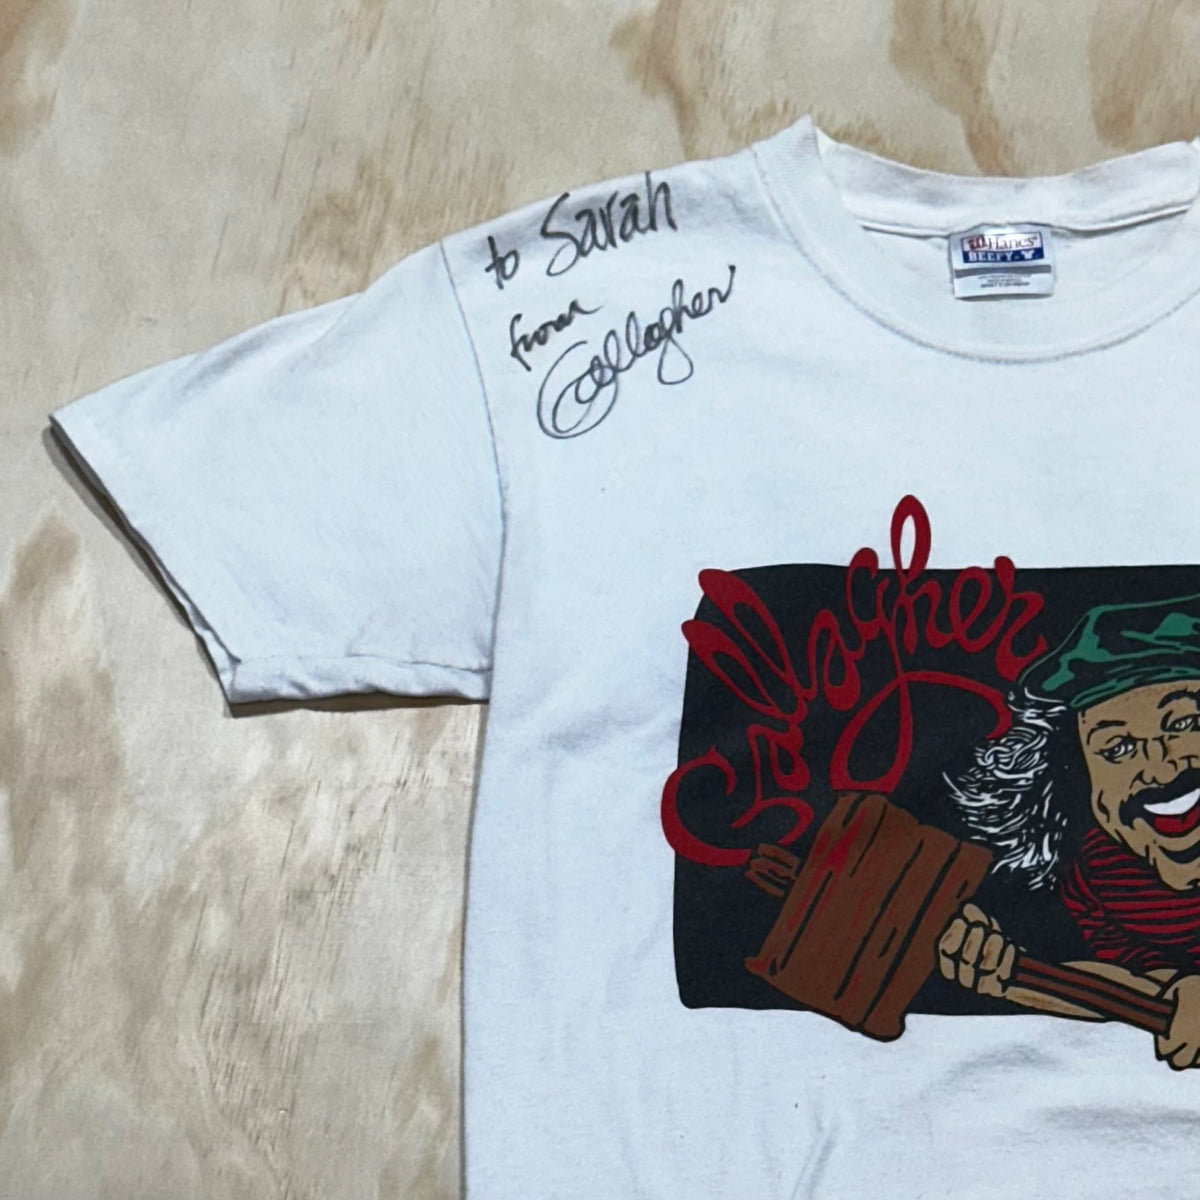 Vintage 90s Gallagher Comedian shirt Signed “to Sarah”